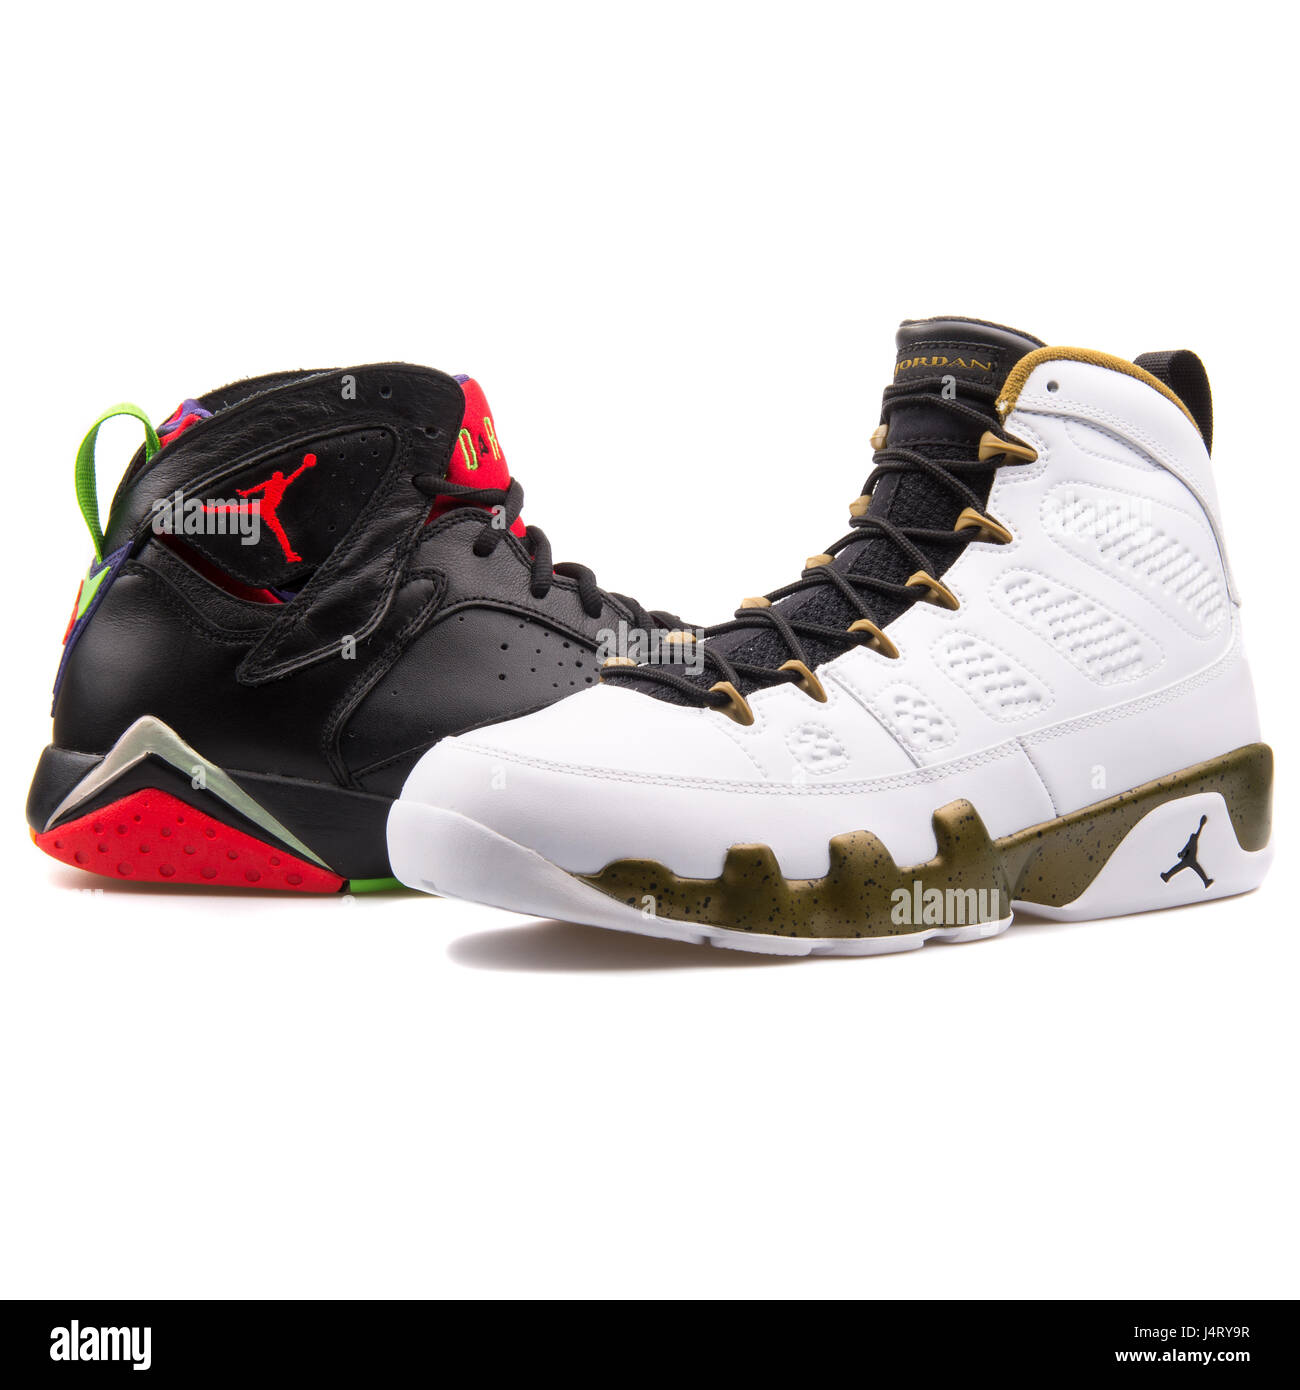 Air jordan sneakers hi-res stock photography and images - Alamy